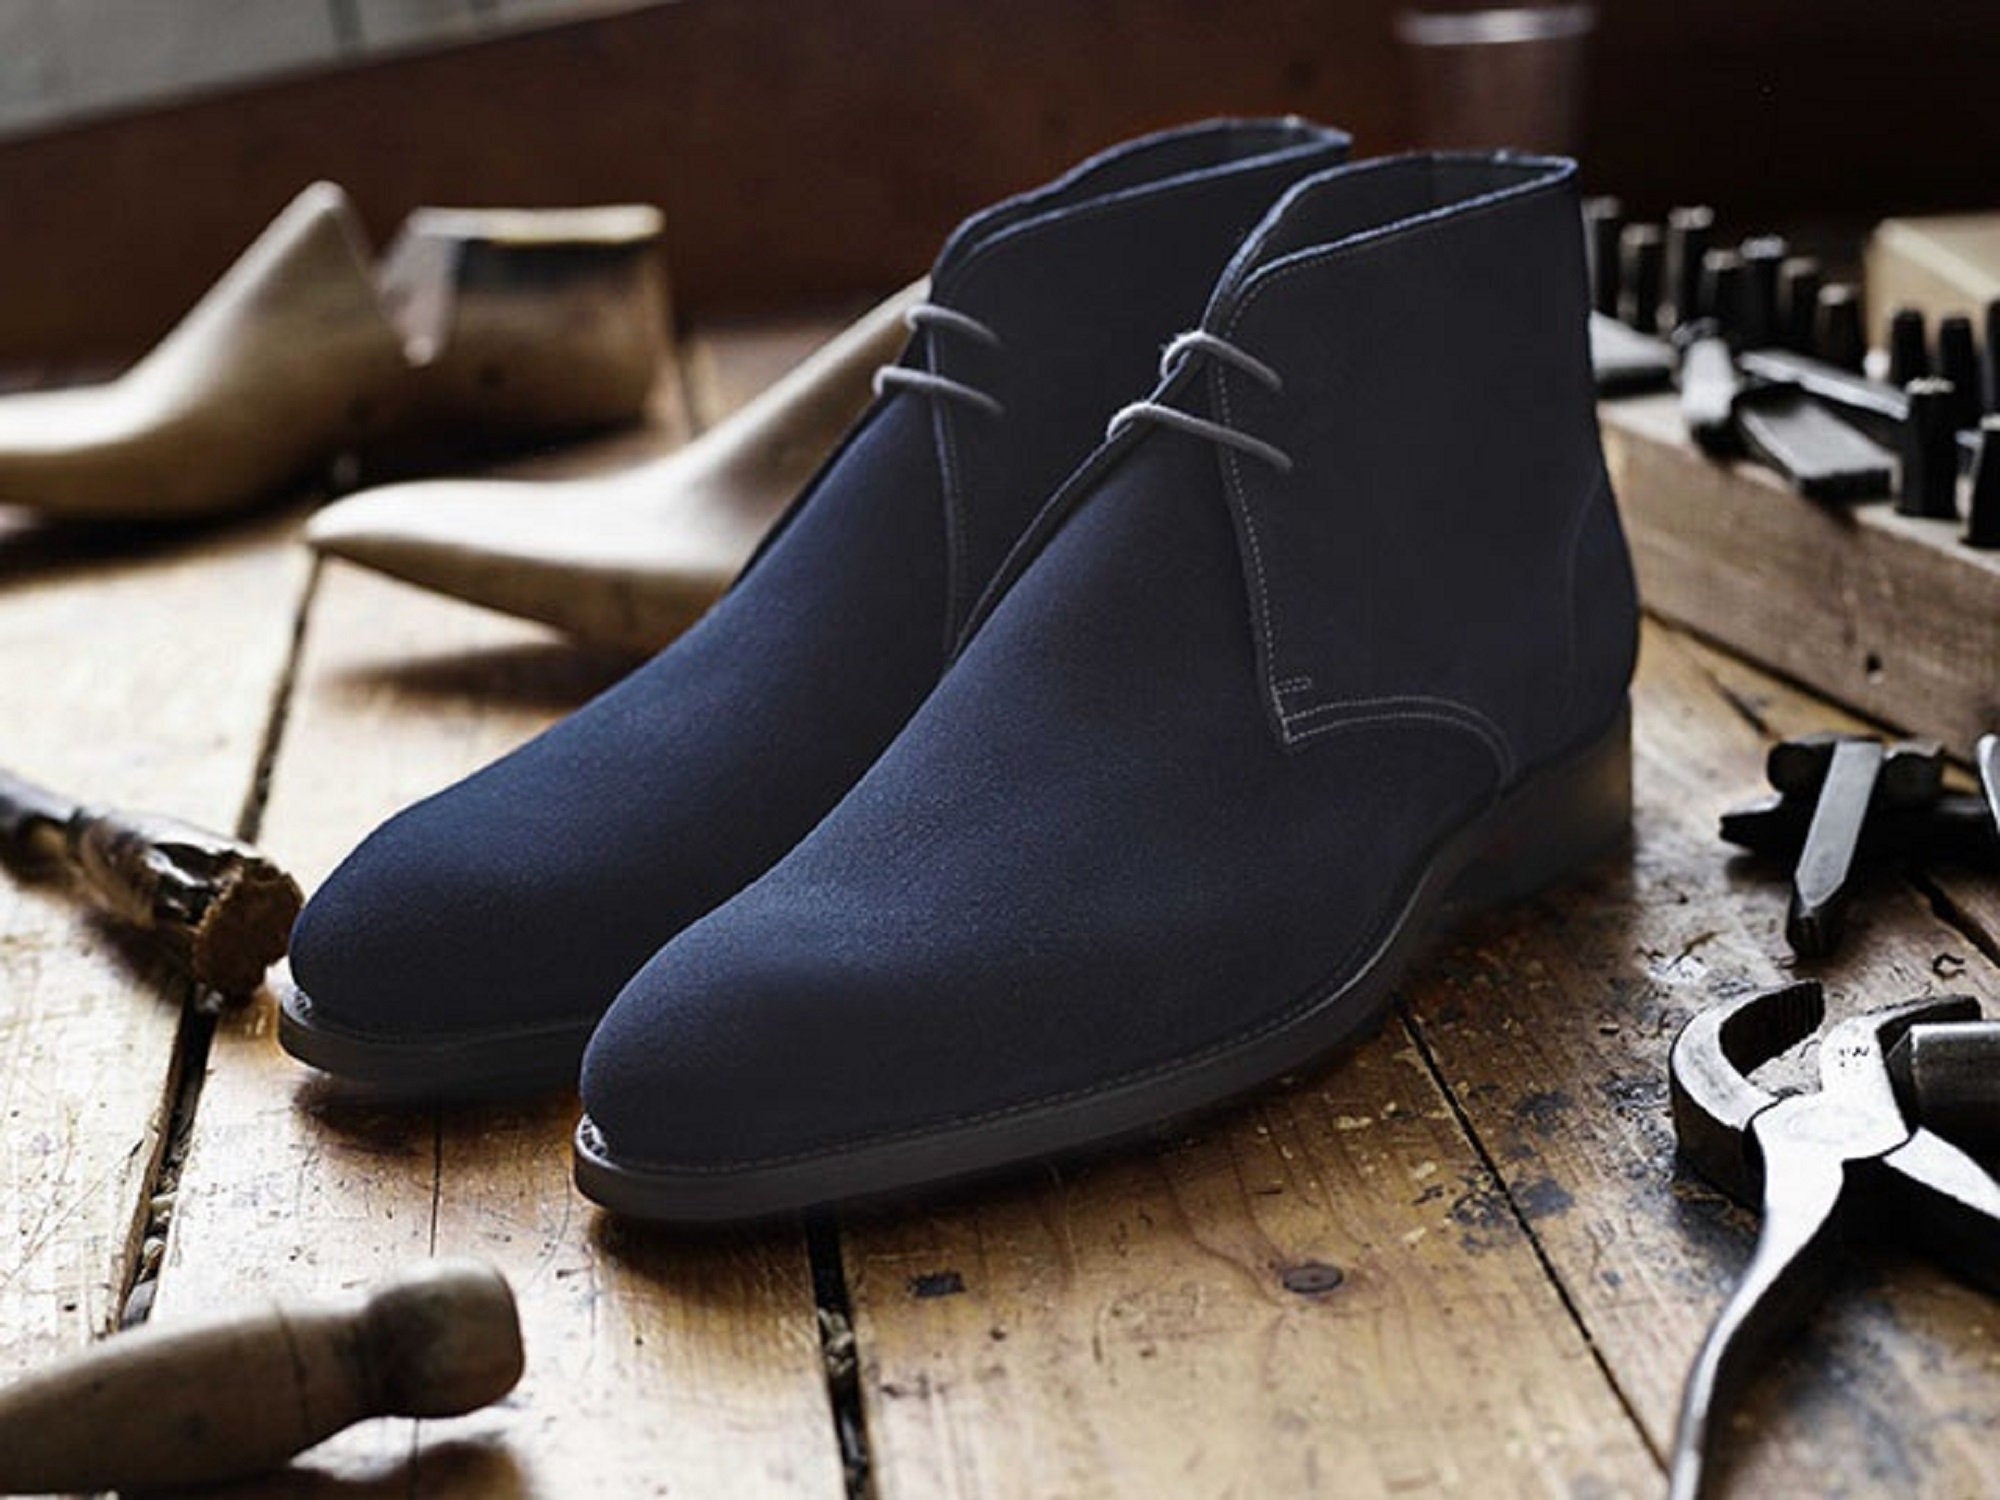 Men's Handmade Leather Wingtip Dress Boots, Wingtip Ankle High Dress Boots, Stylish Boots for Men's